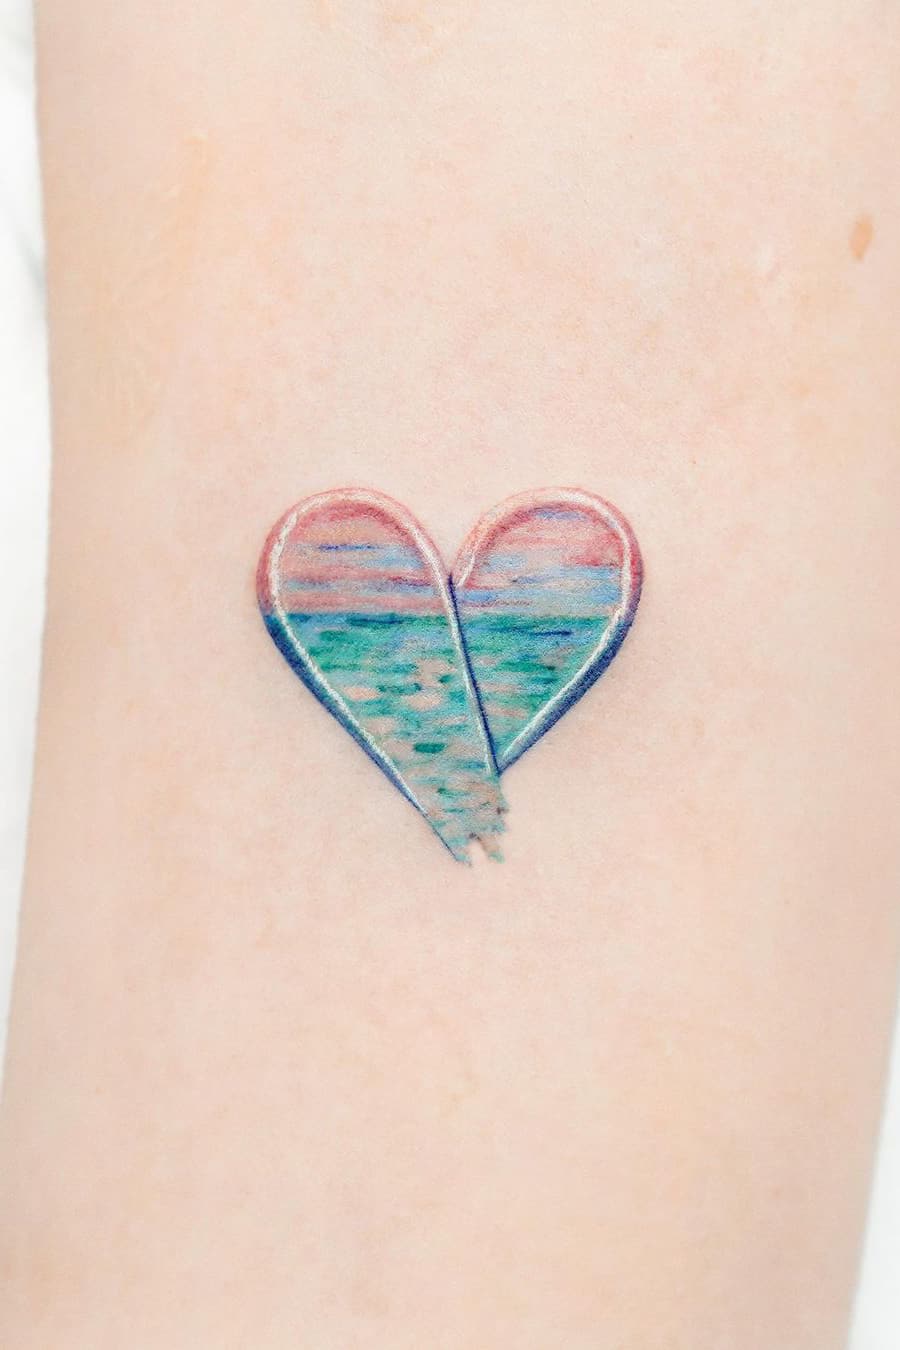 Landscape Heart Tattoo